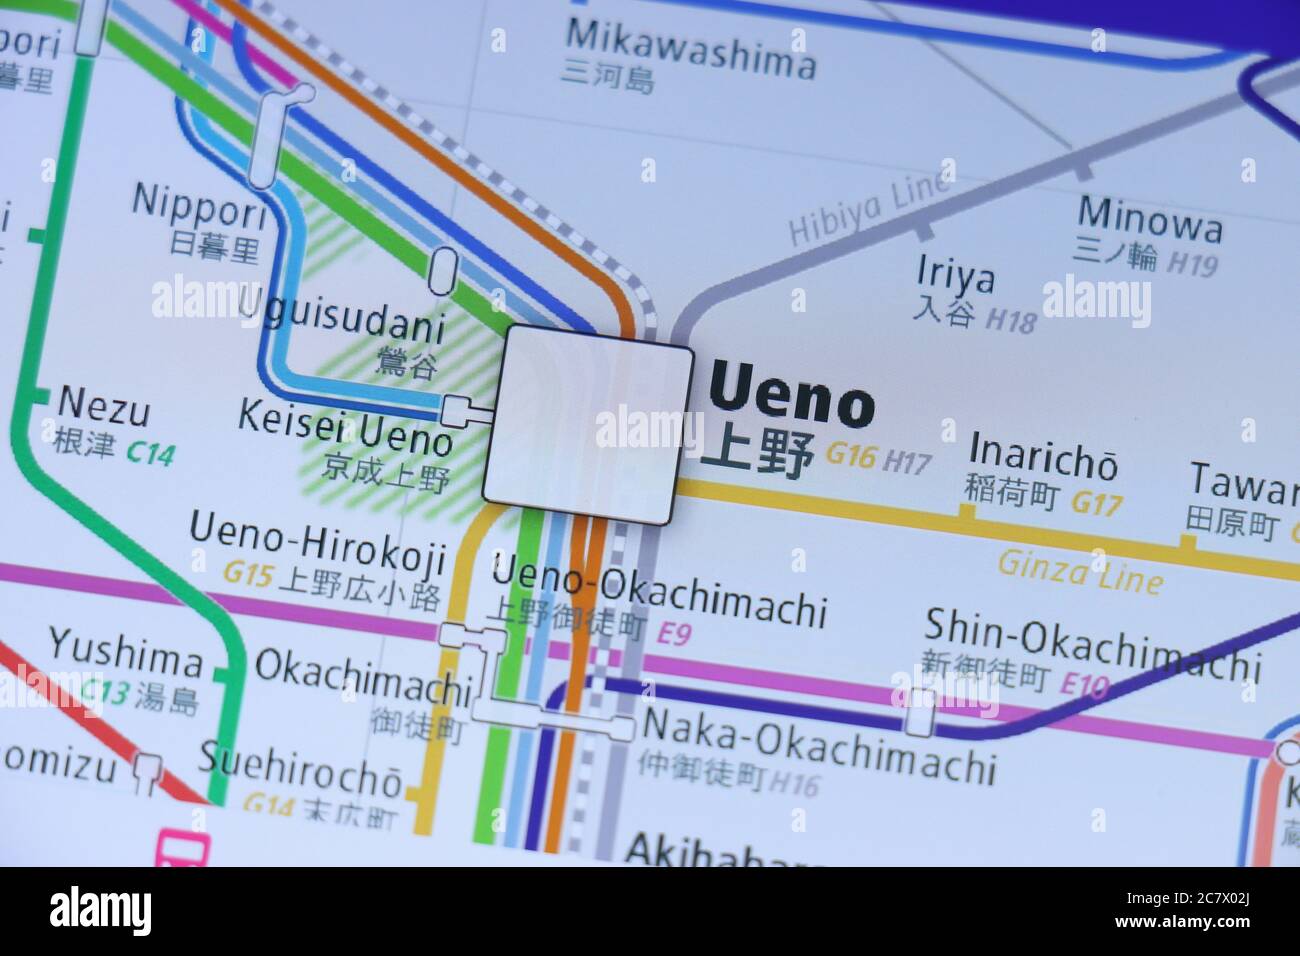 Ueno Station on Tokyo subway map on smartphone screen. Stock Photo